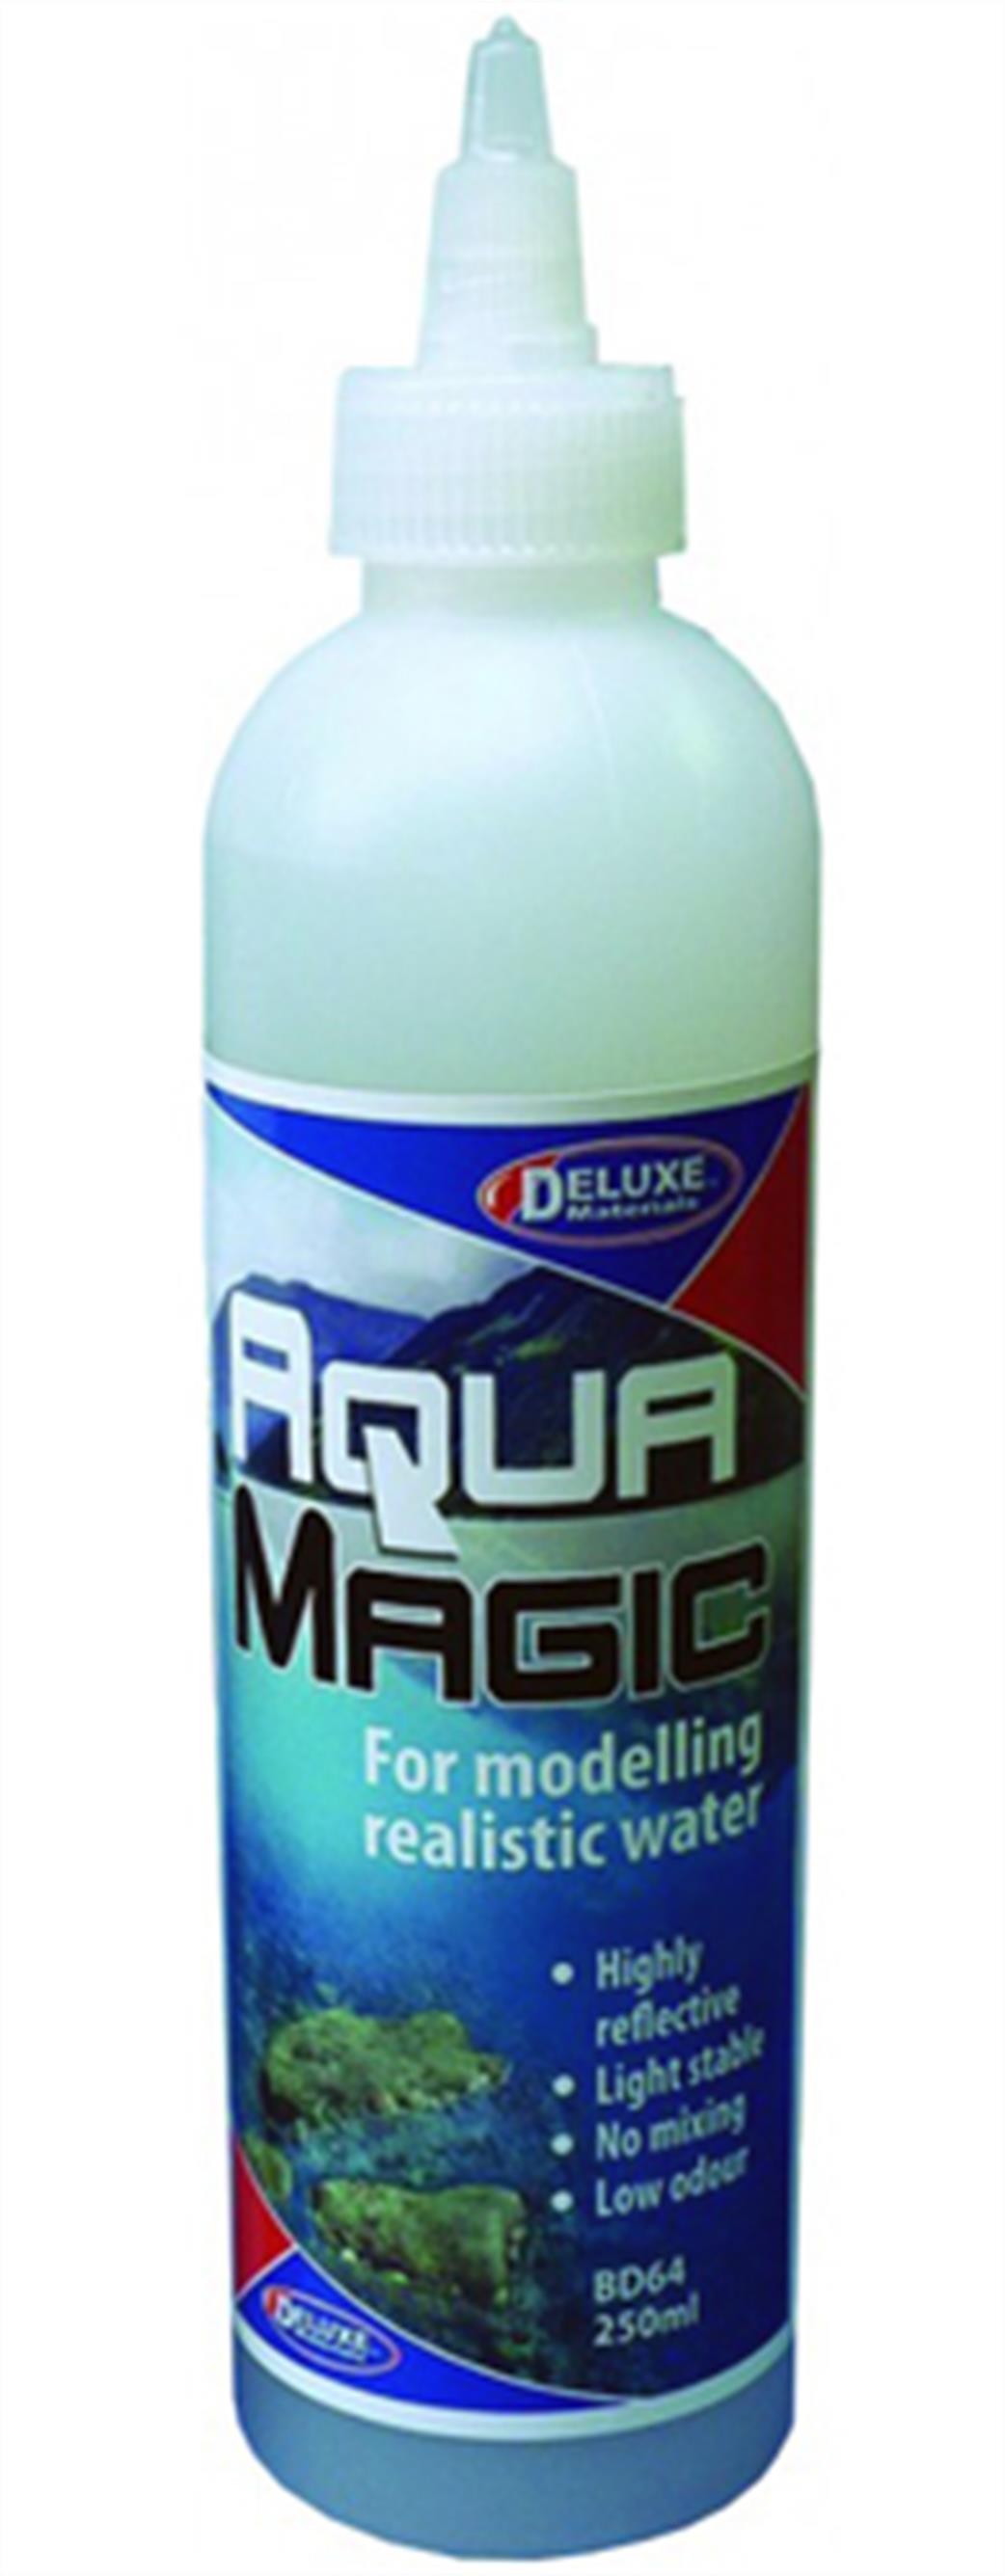 Deluxe Materials BD64 Aqua Magic 250ml for modelling Realistic Water